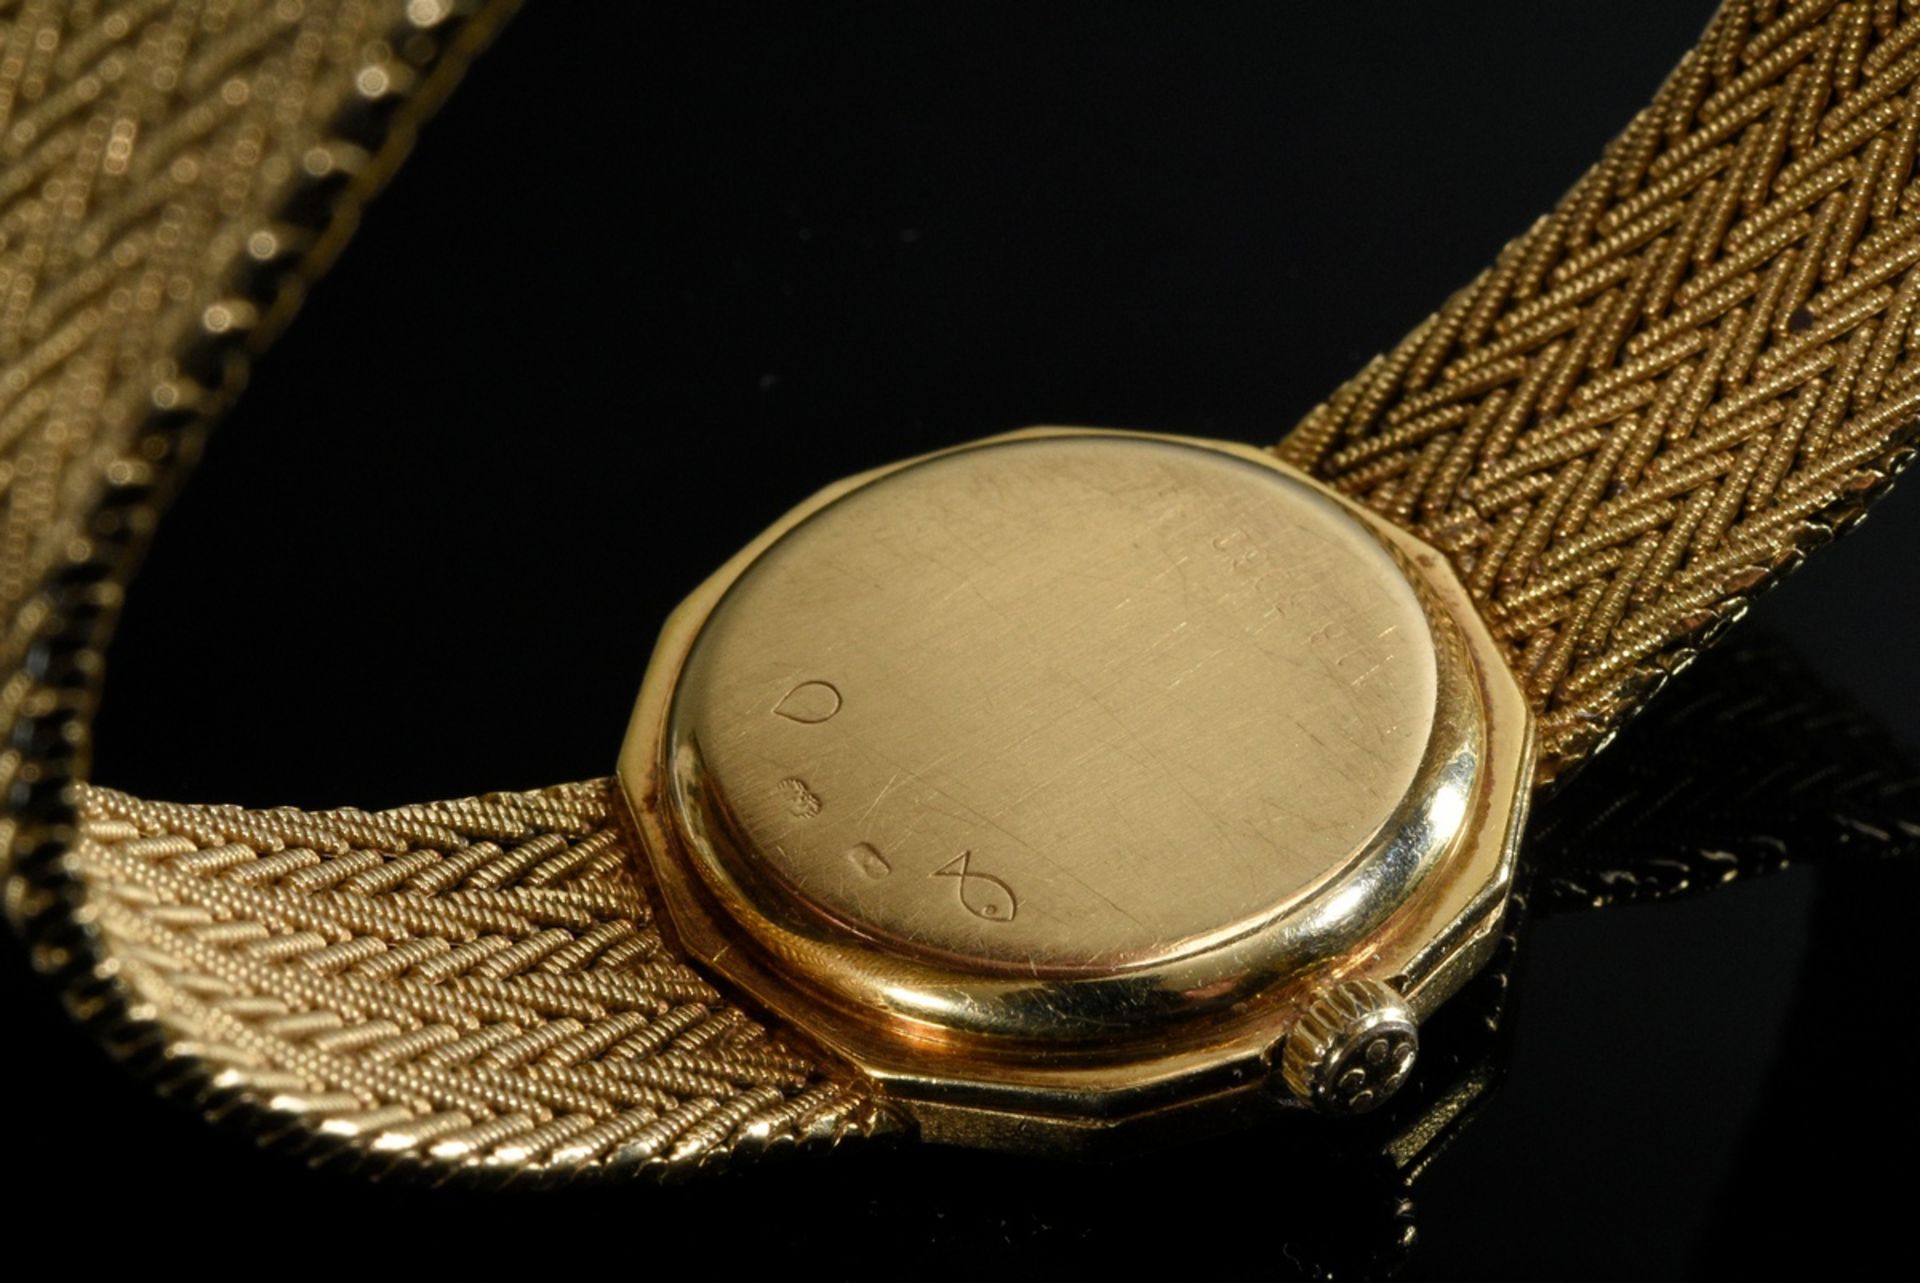 Eterna yellow gold 750 ladies' wristwatch with braided bracelet, quartz, black dial, date, Roman nu - Image 2 of 4